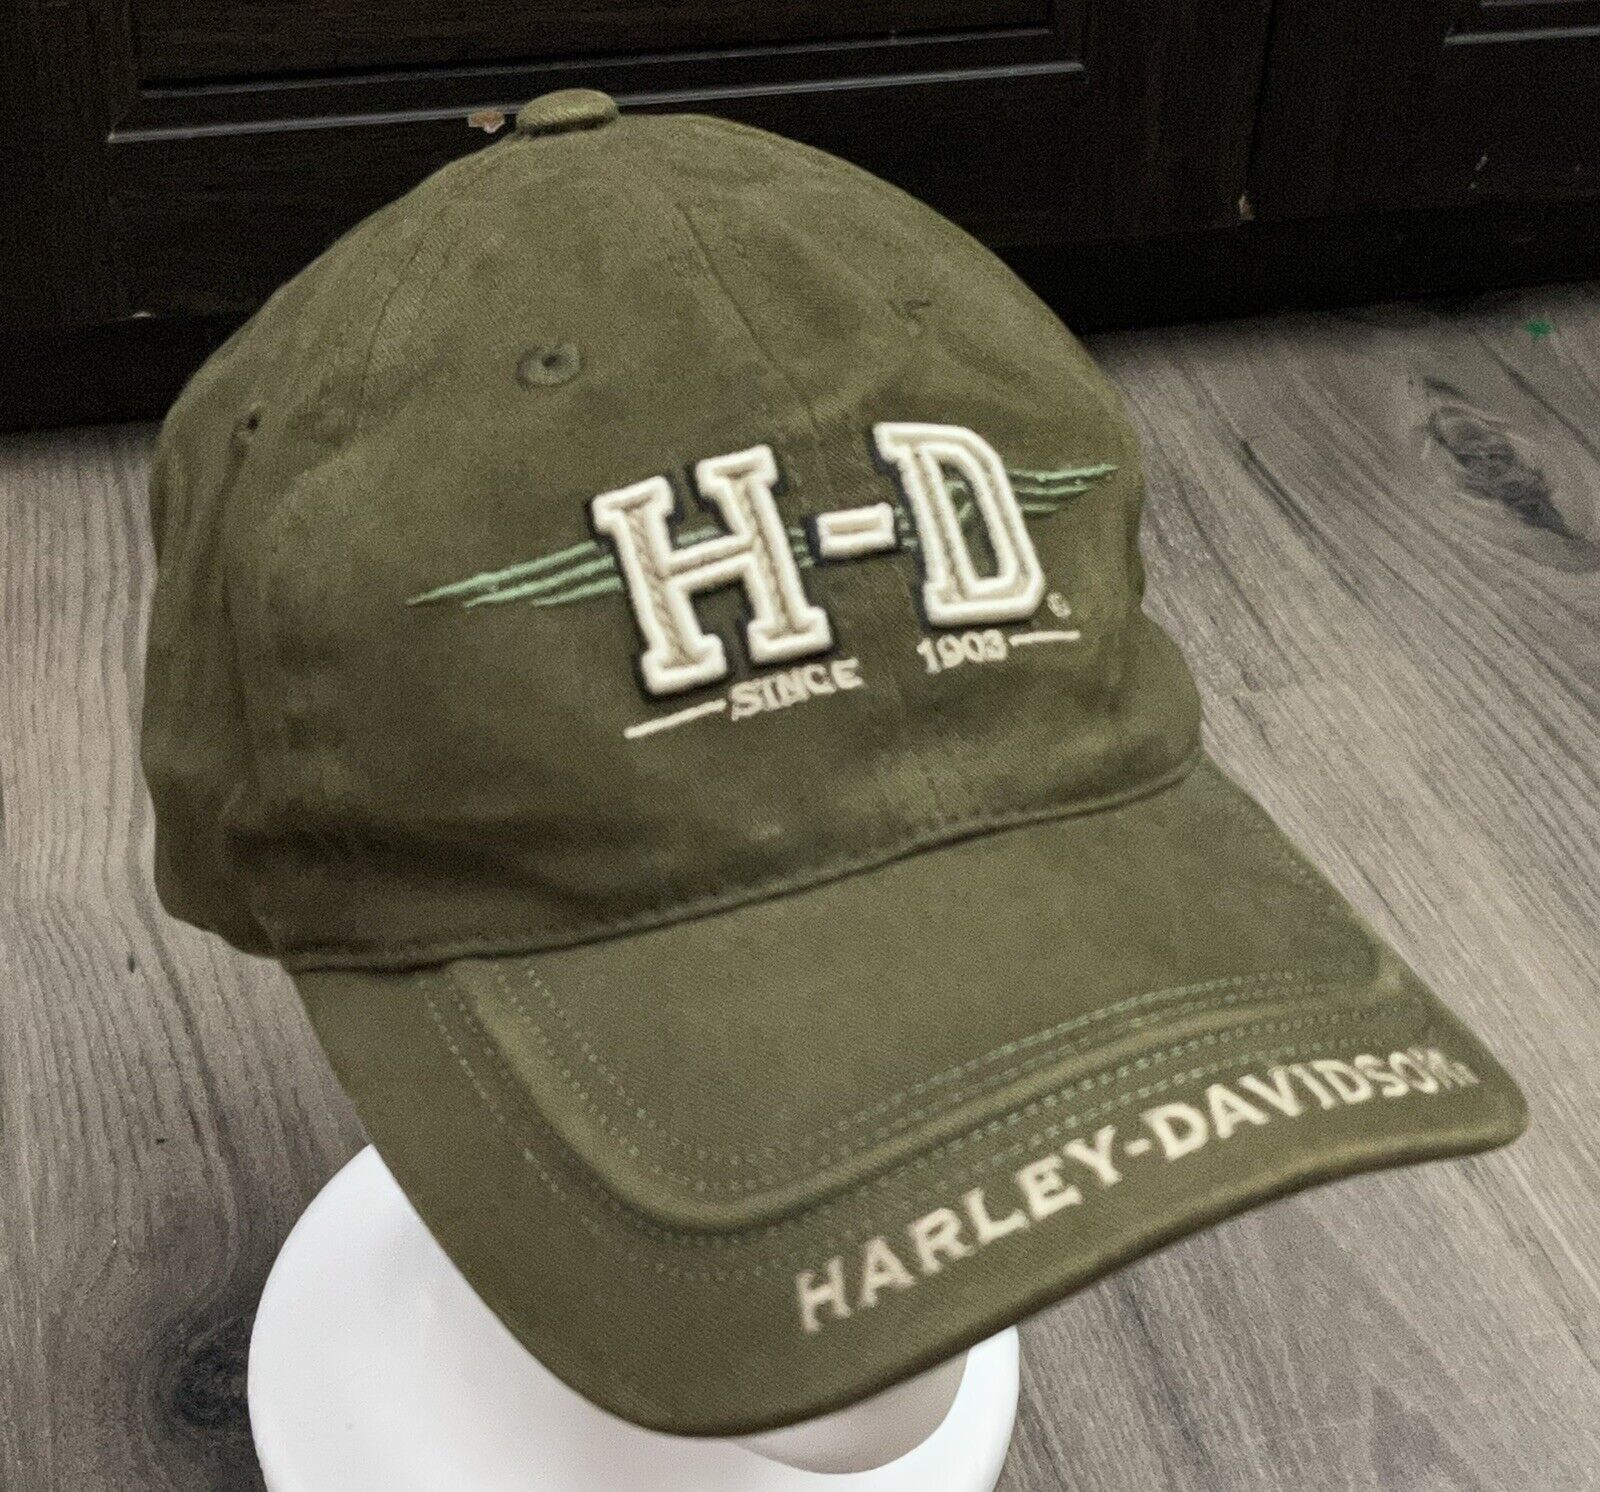 Harley Davidson Montreal Quebec Canada Embroidered hat adjustable strap Green